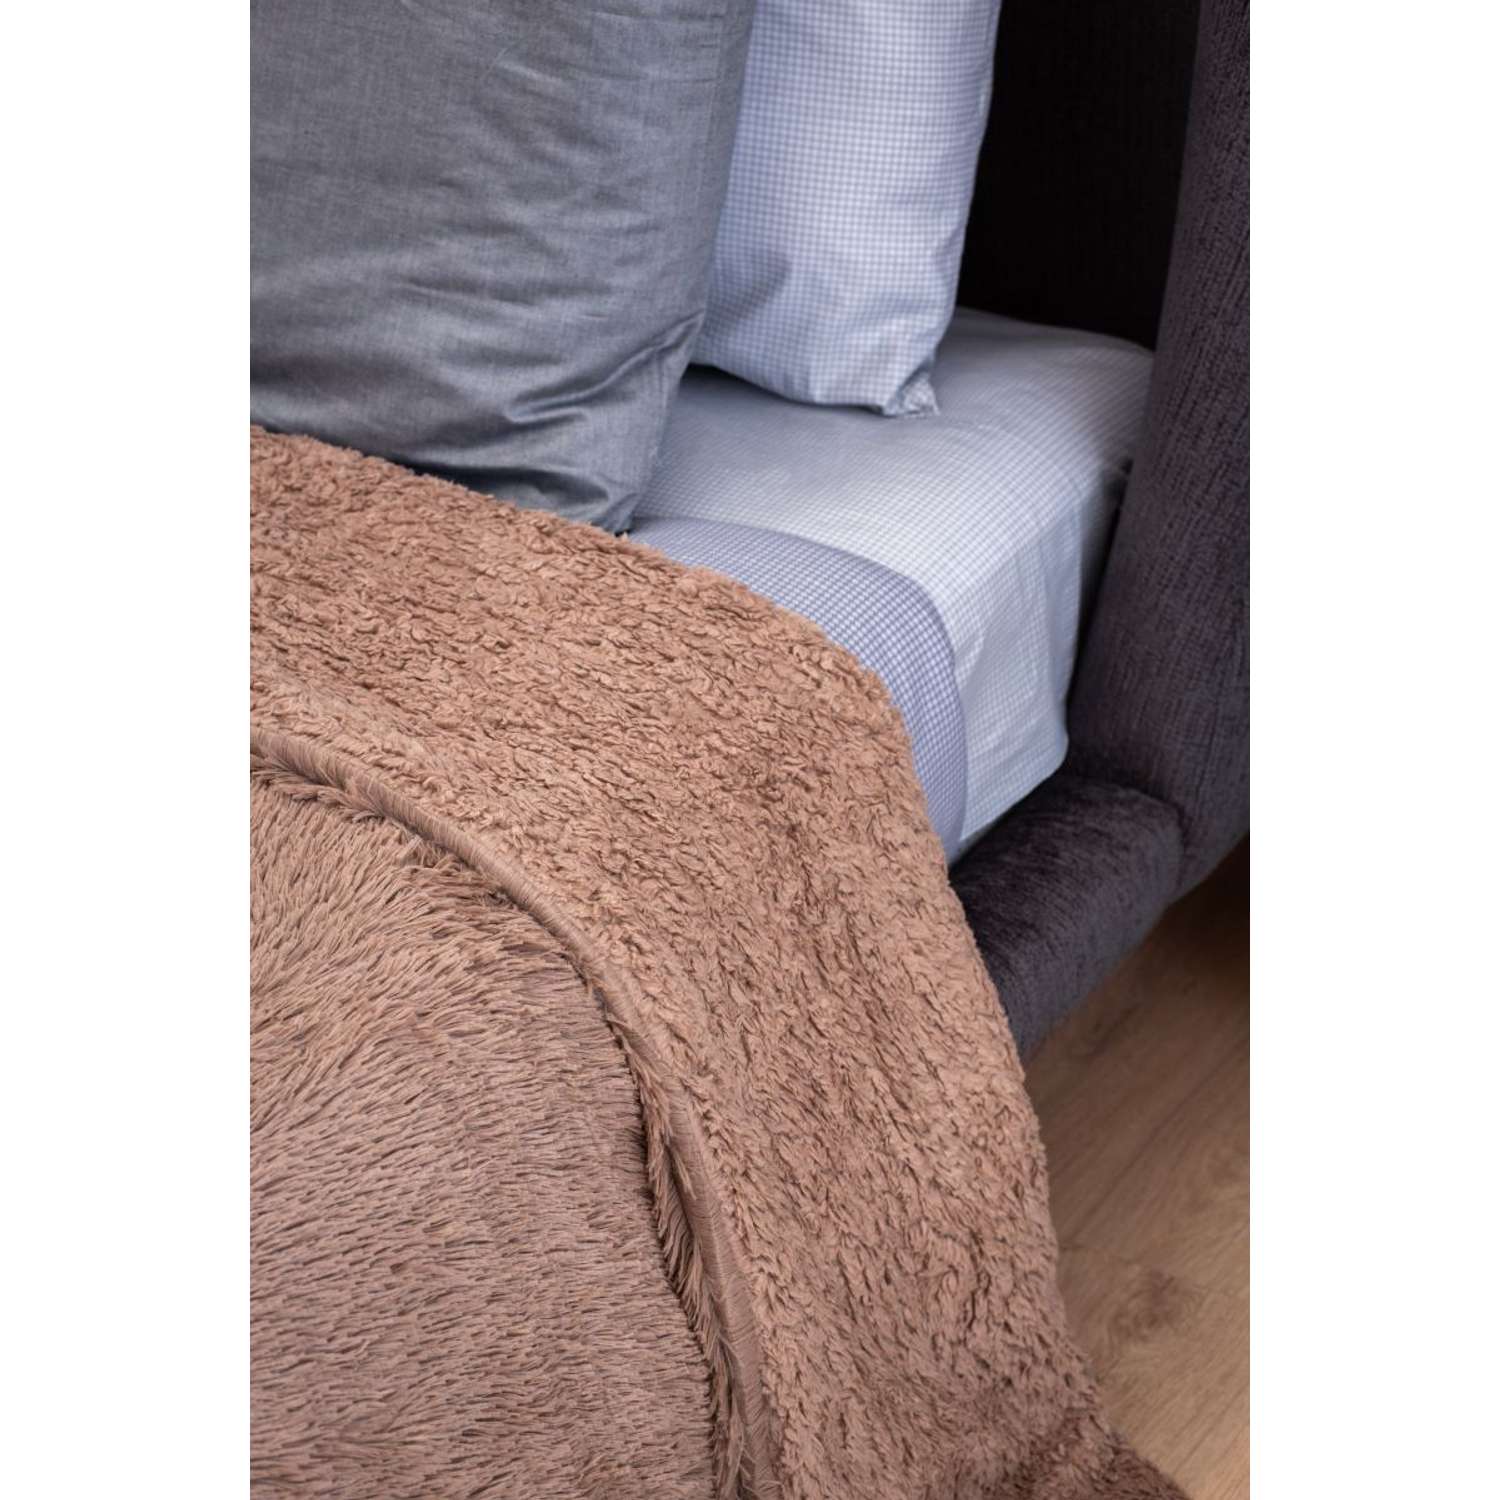 Плед Arya Home Collection Пушистый 200х220 Parison меховое на диван кровать - фото 3